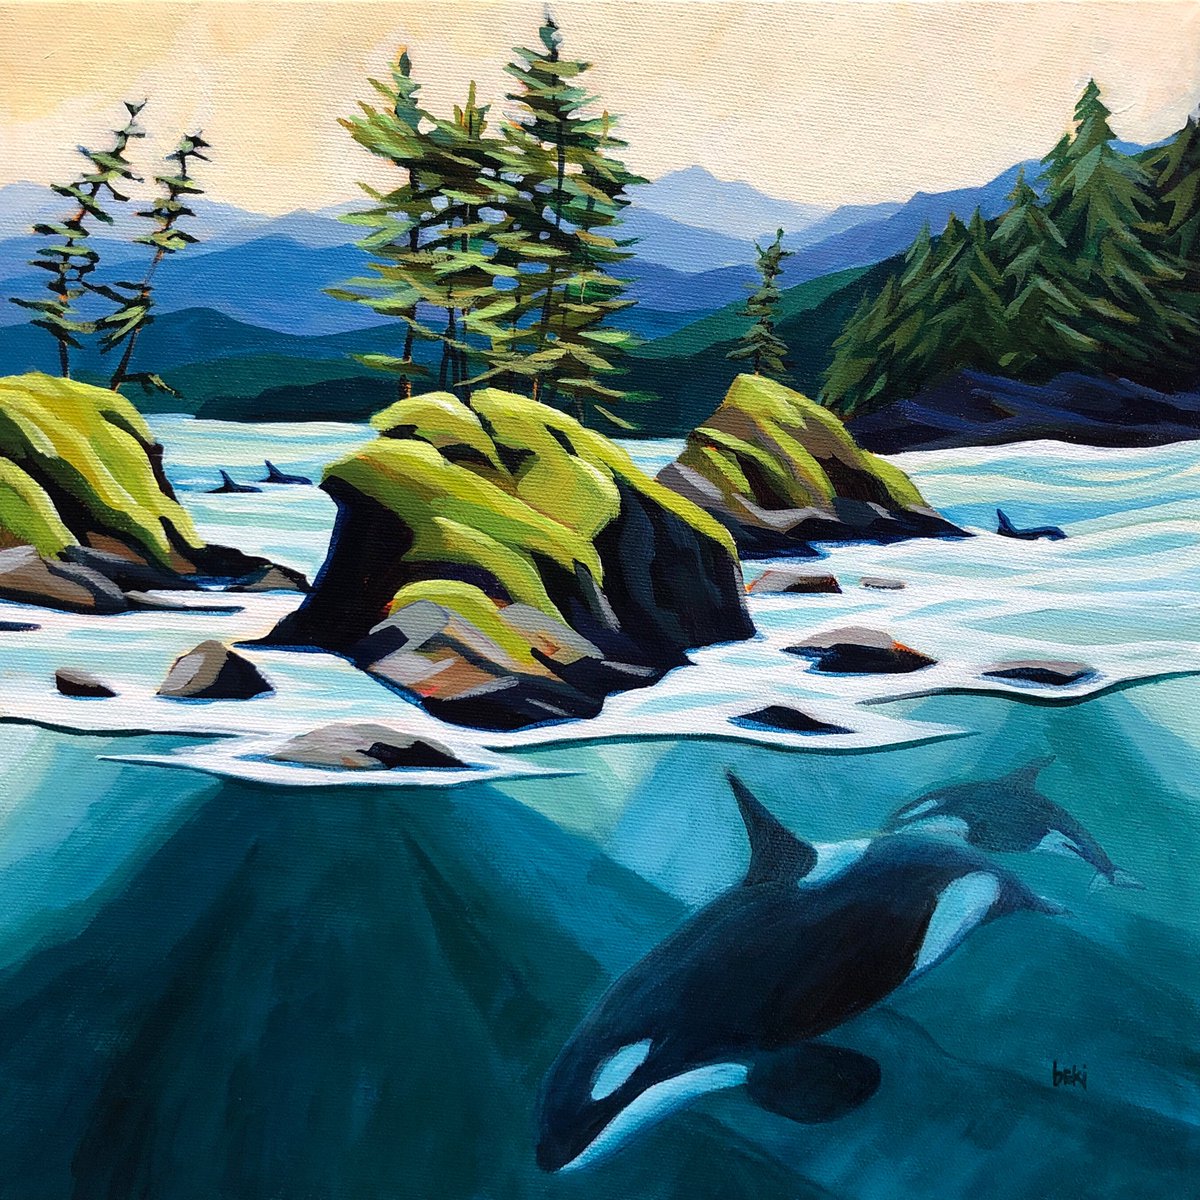 Follow
12x12” acrylic 
.
#whales #orca #whaleart #underwater #pnw #bc #bcartist #bcart #canada #canadaart #westcoast #westcoastart #follow #underwaterart #marinelife #marineart #coastallandscape